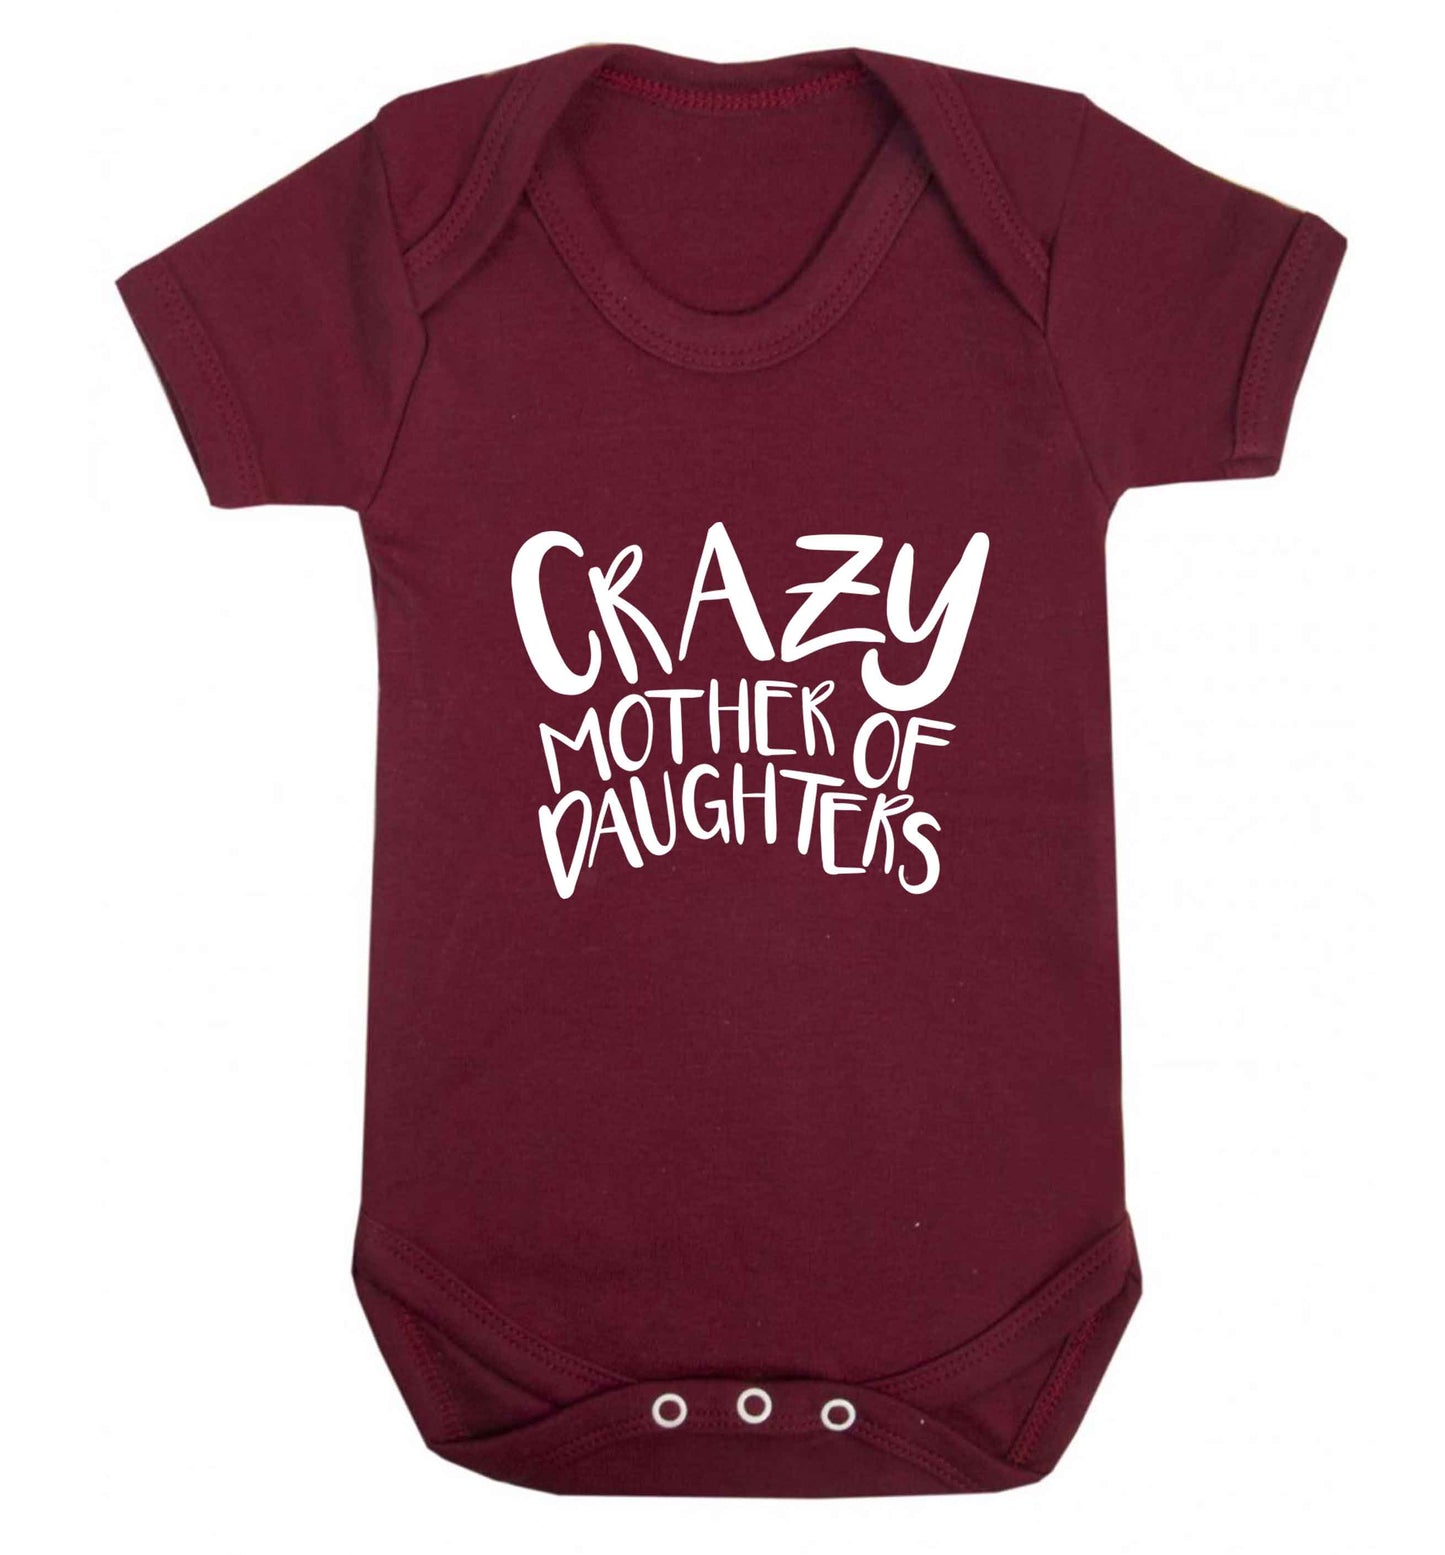 Crazy mother of daughters baby vest maroon 18-24 months